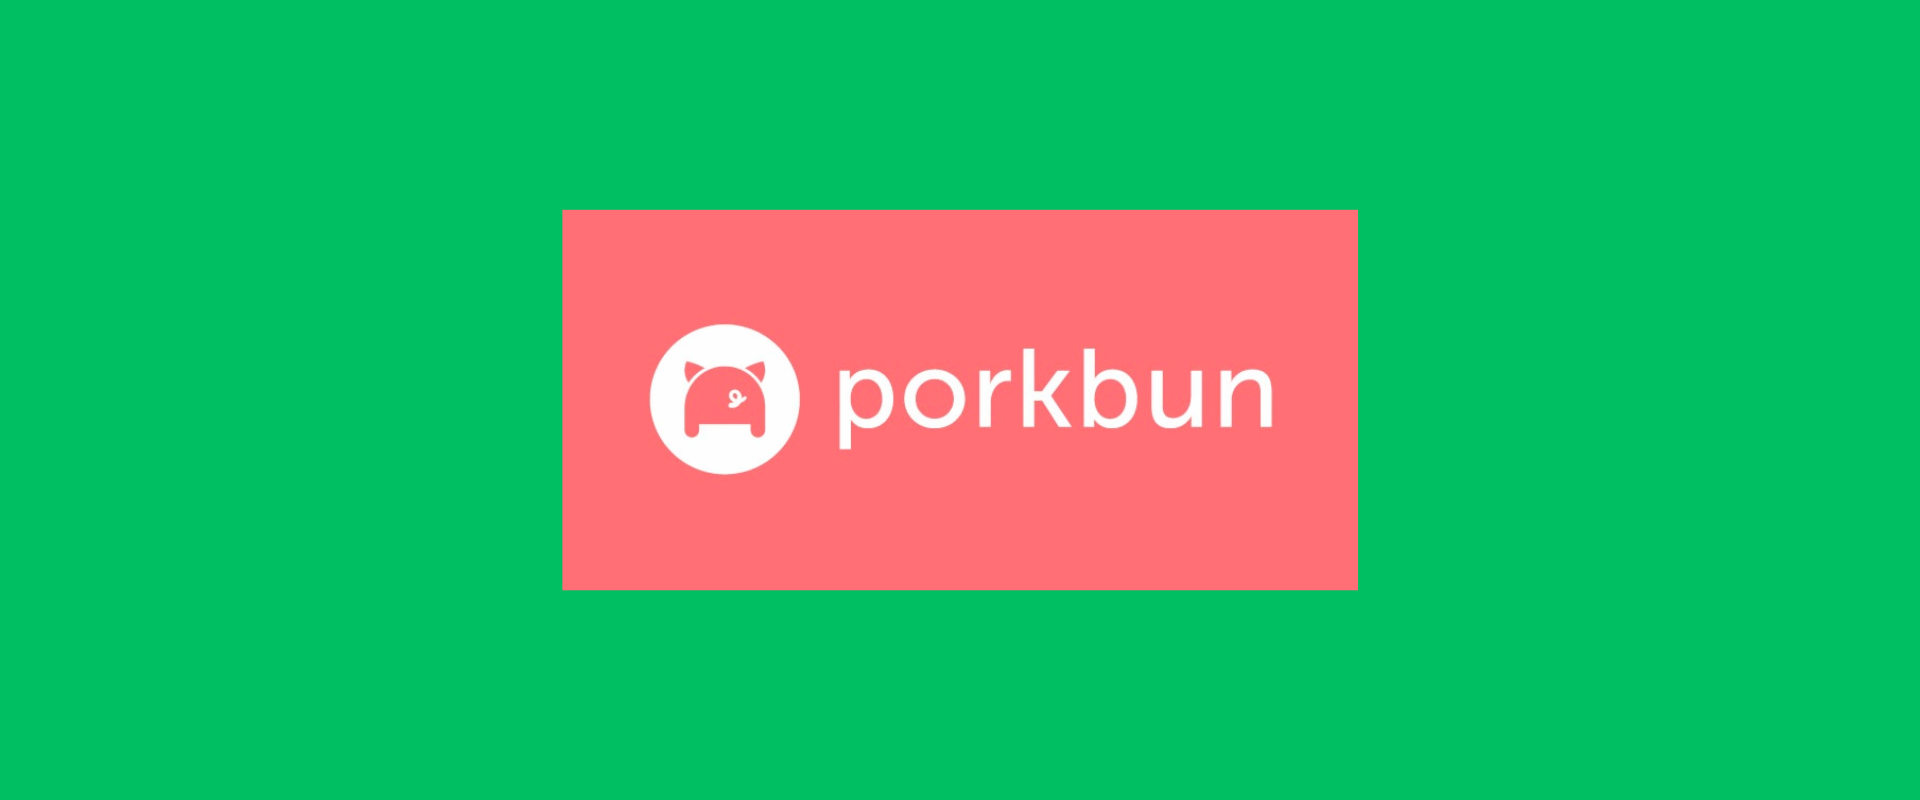 Porkbun Review: Affordable Domain Registration and Hosting Services